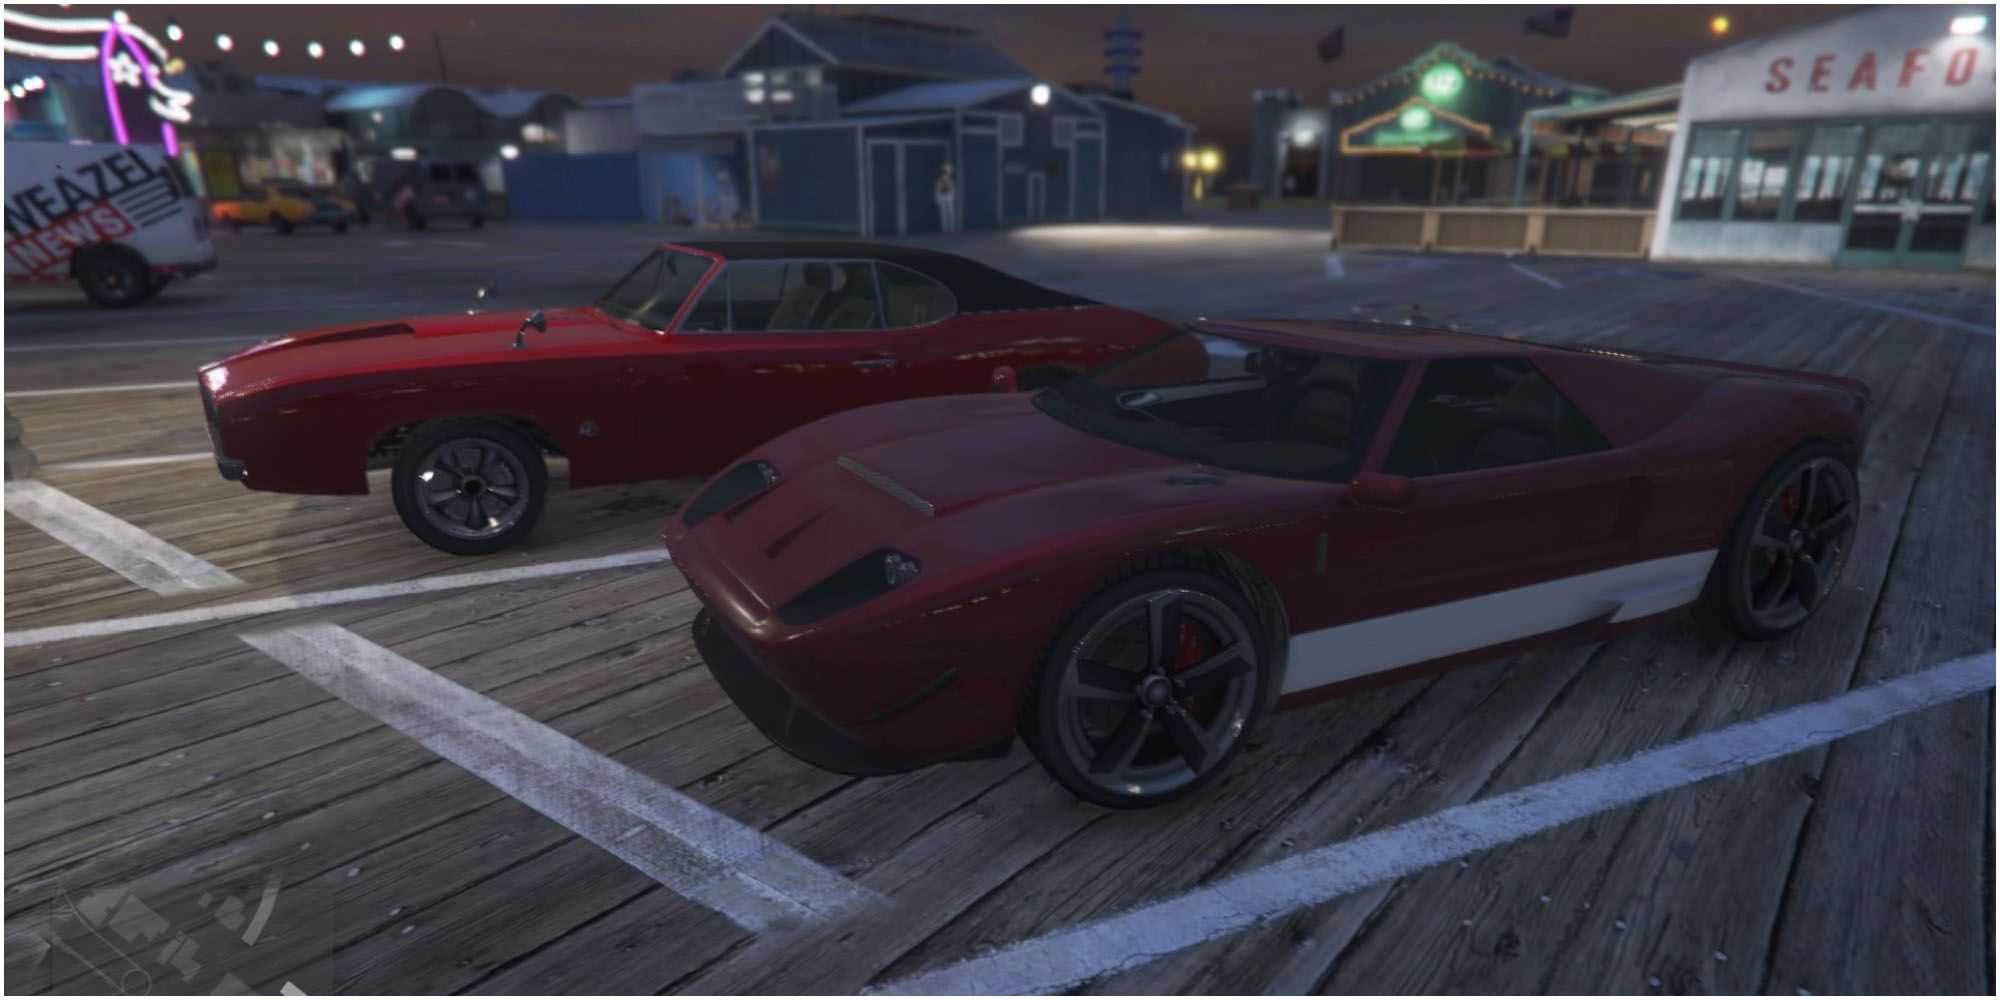 GTA V Del Perro Pier Car Park Two Red High Quality Cars